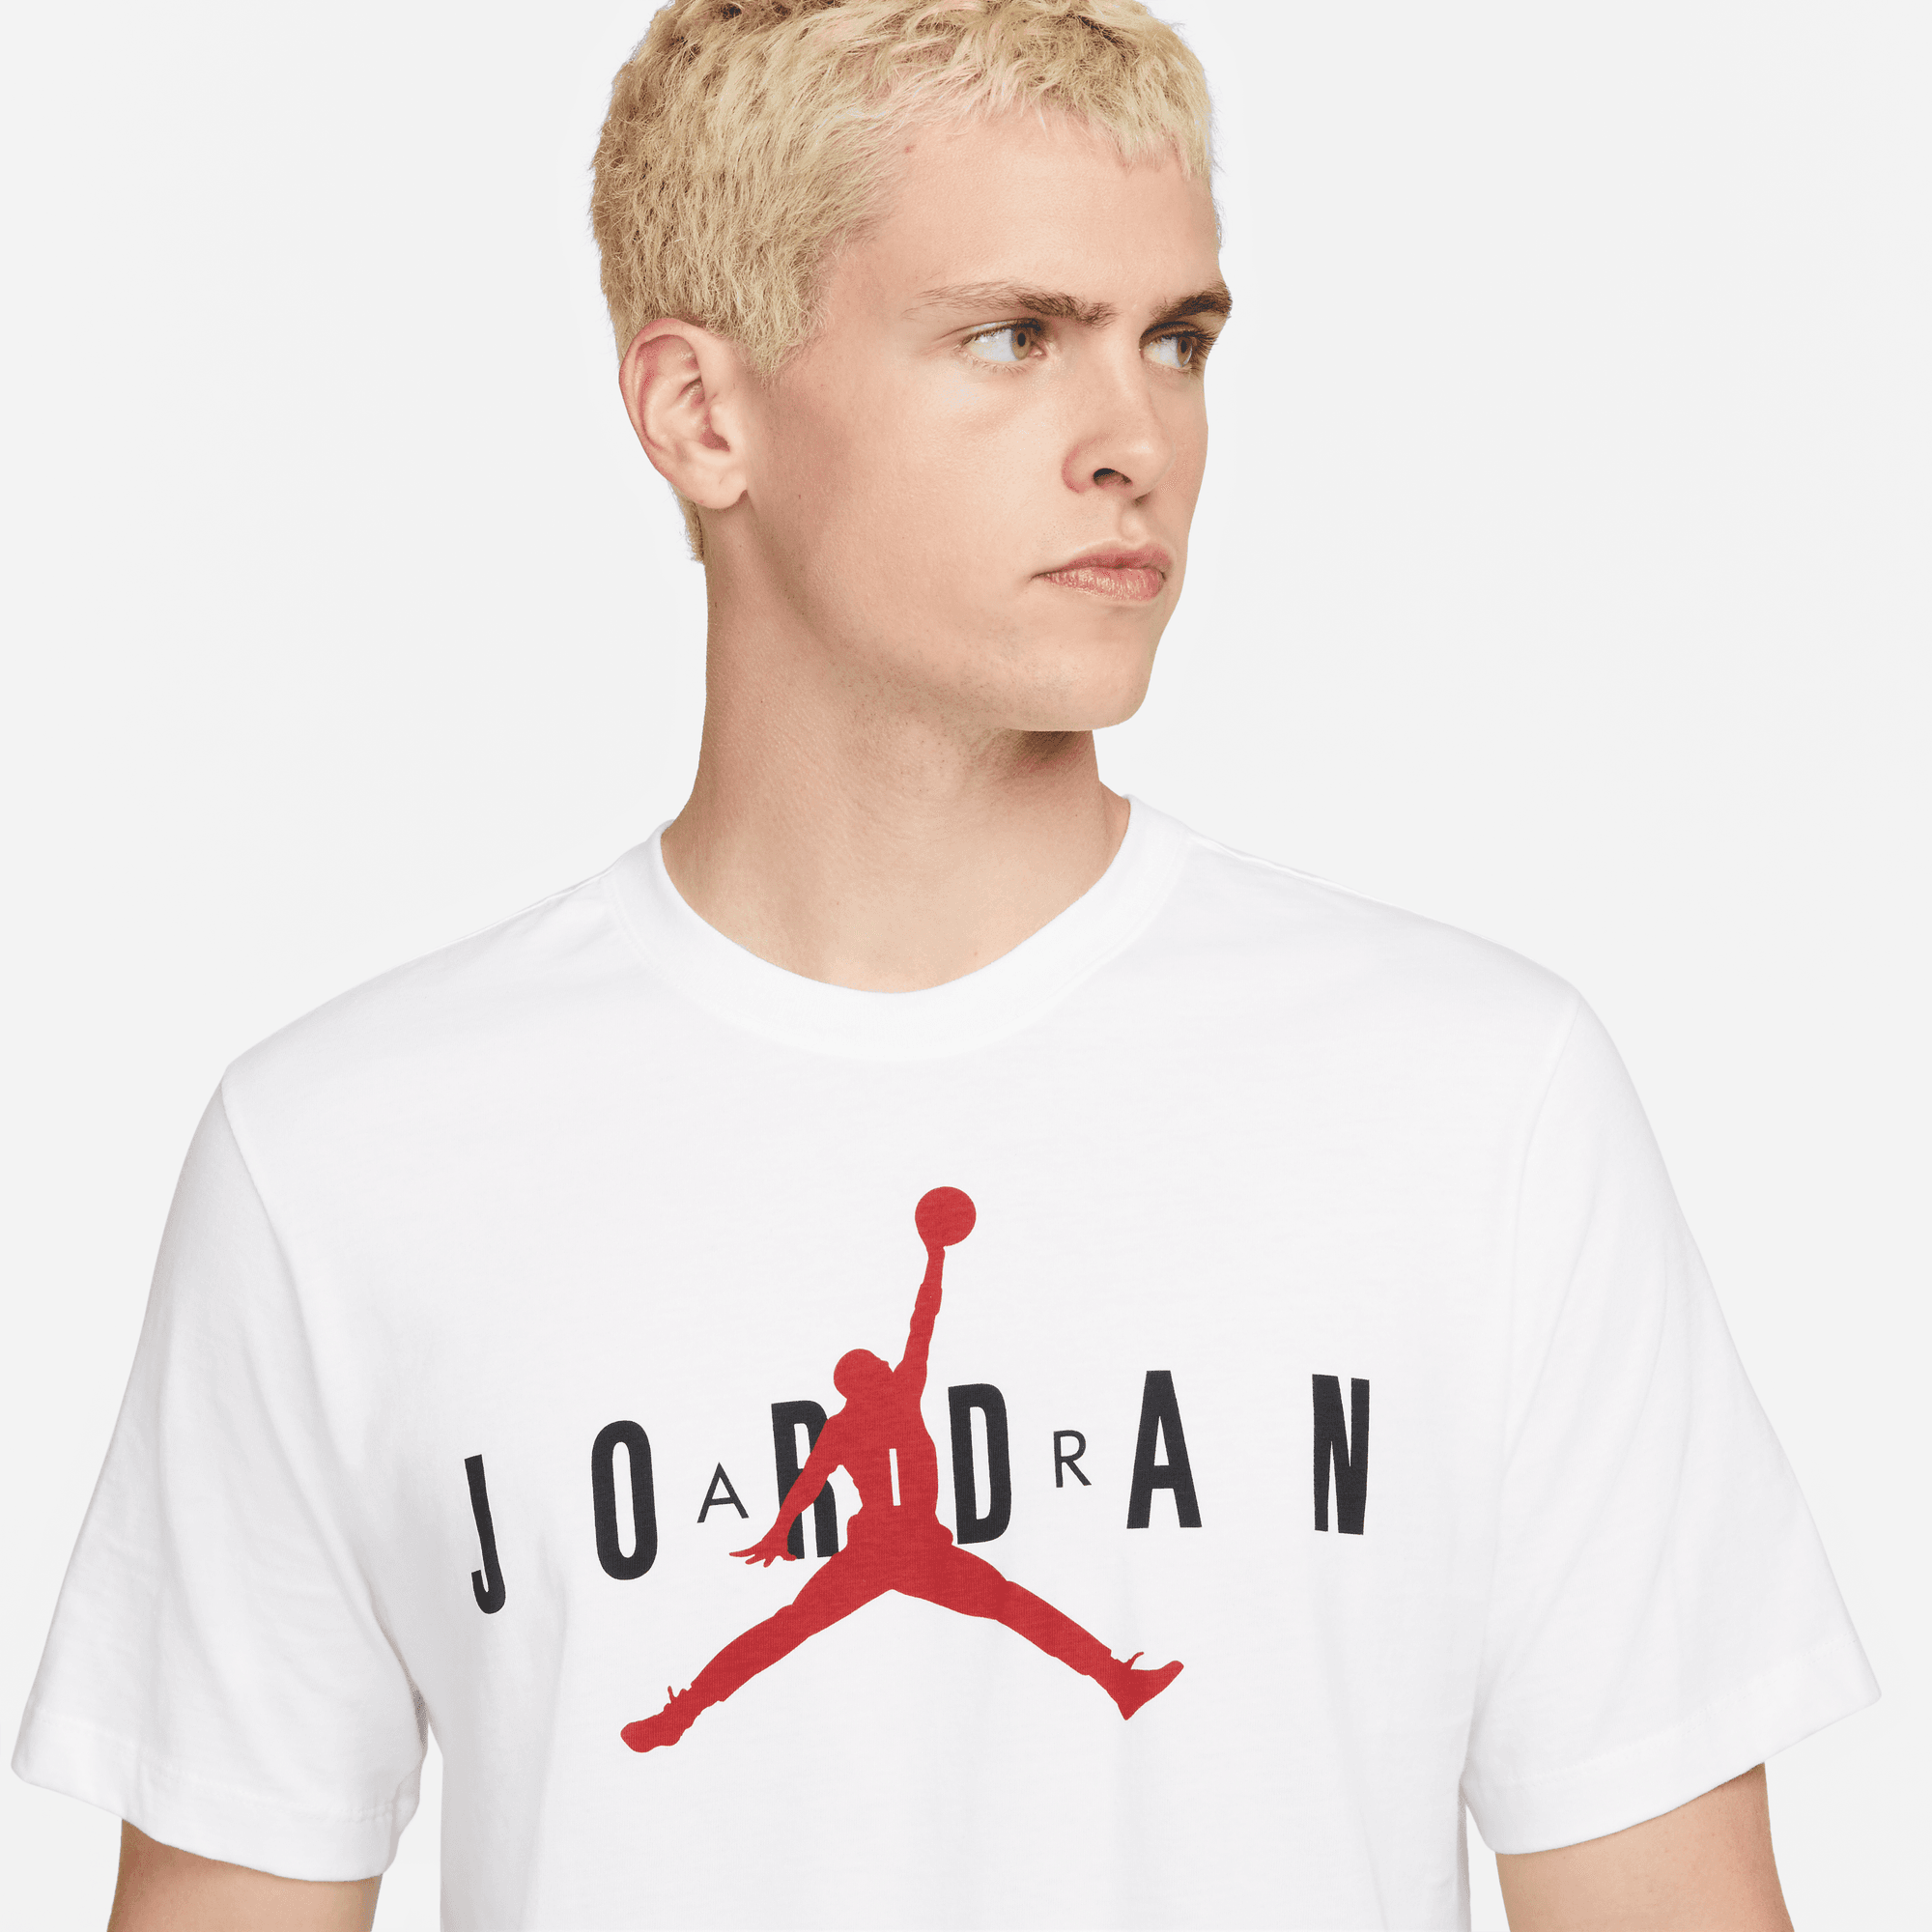 Jordan Air Wordmark T-Shirt CK4212-103